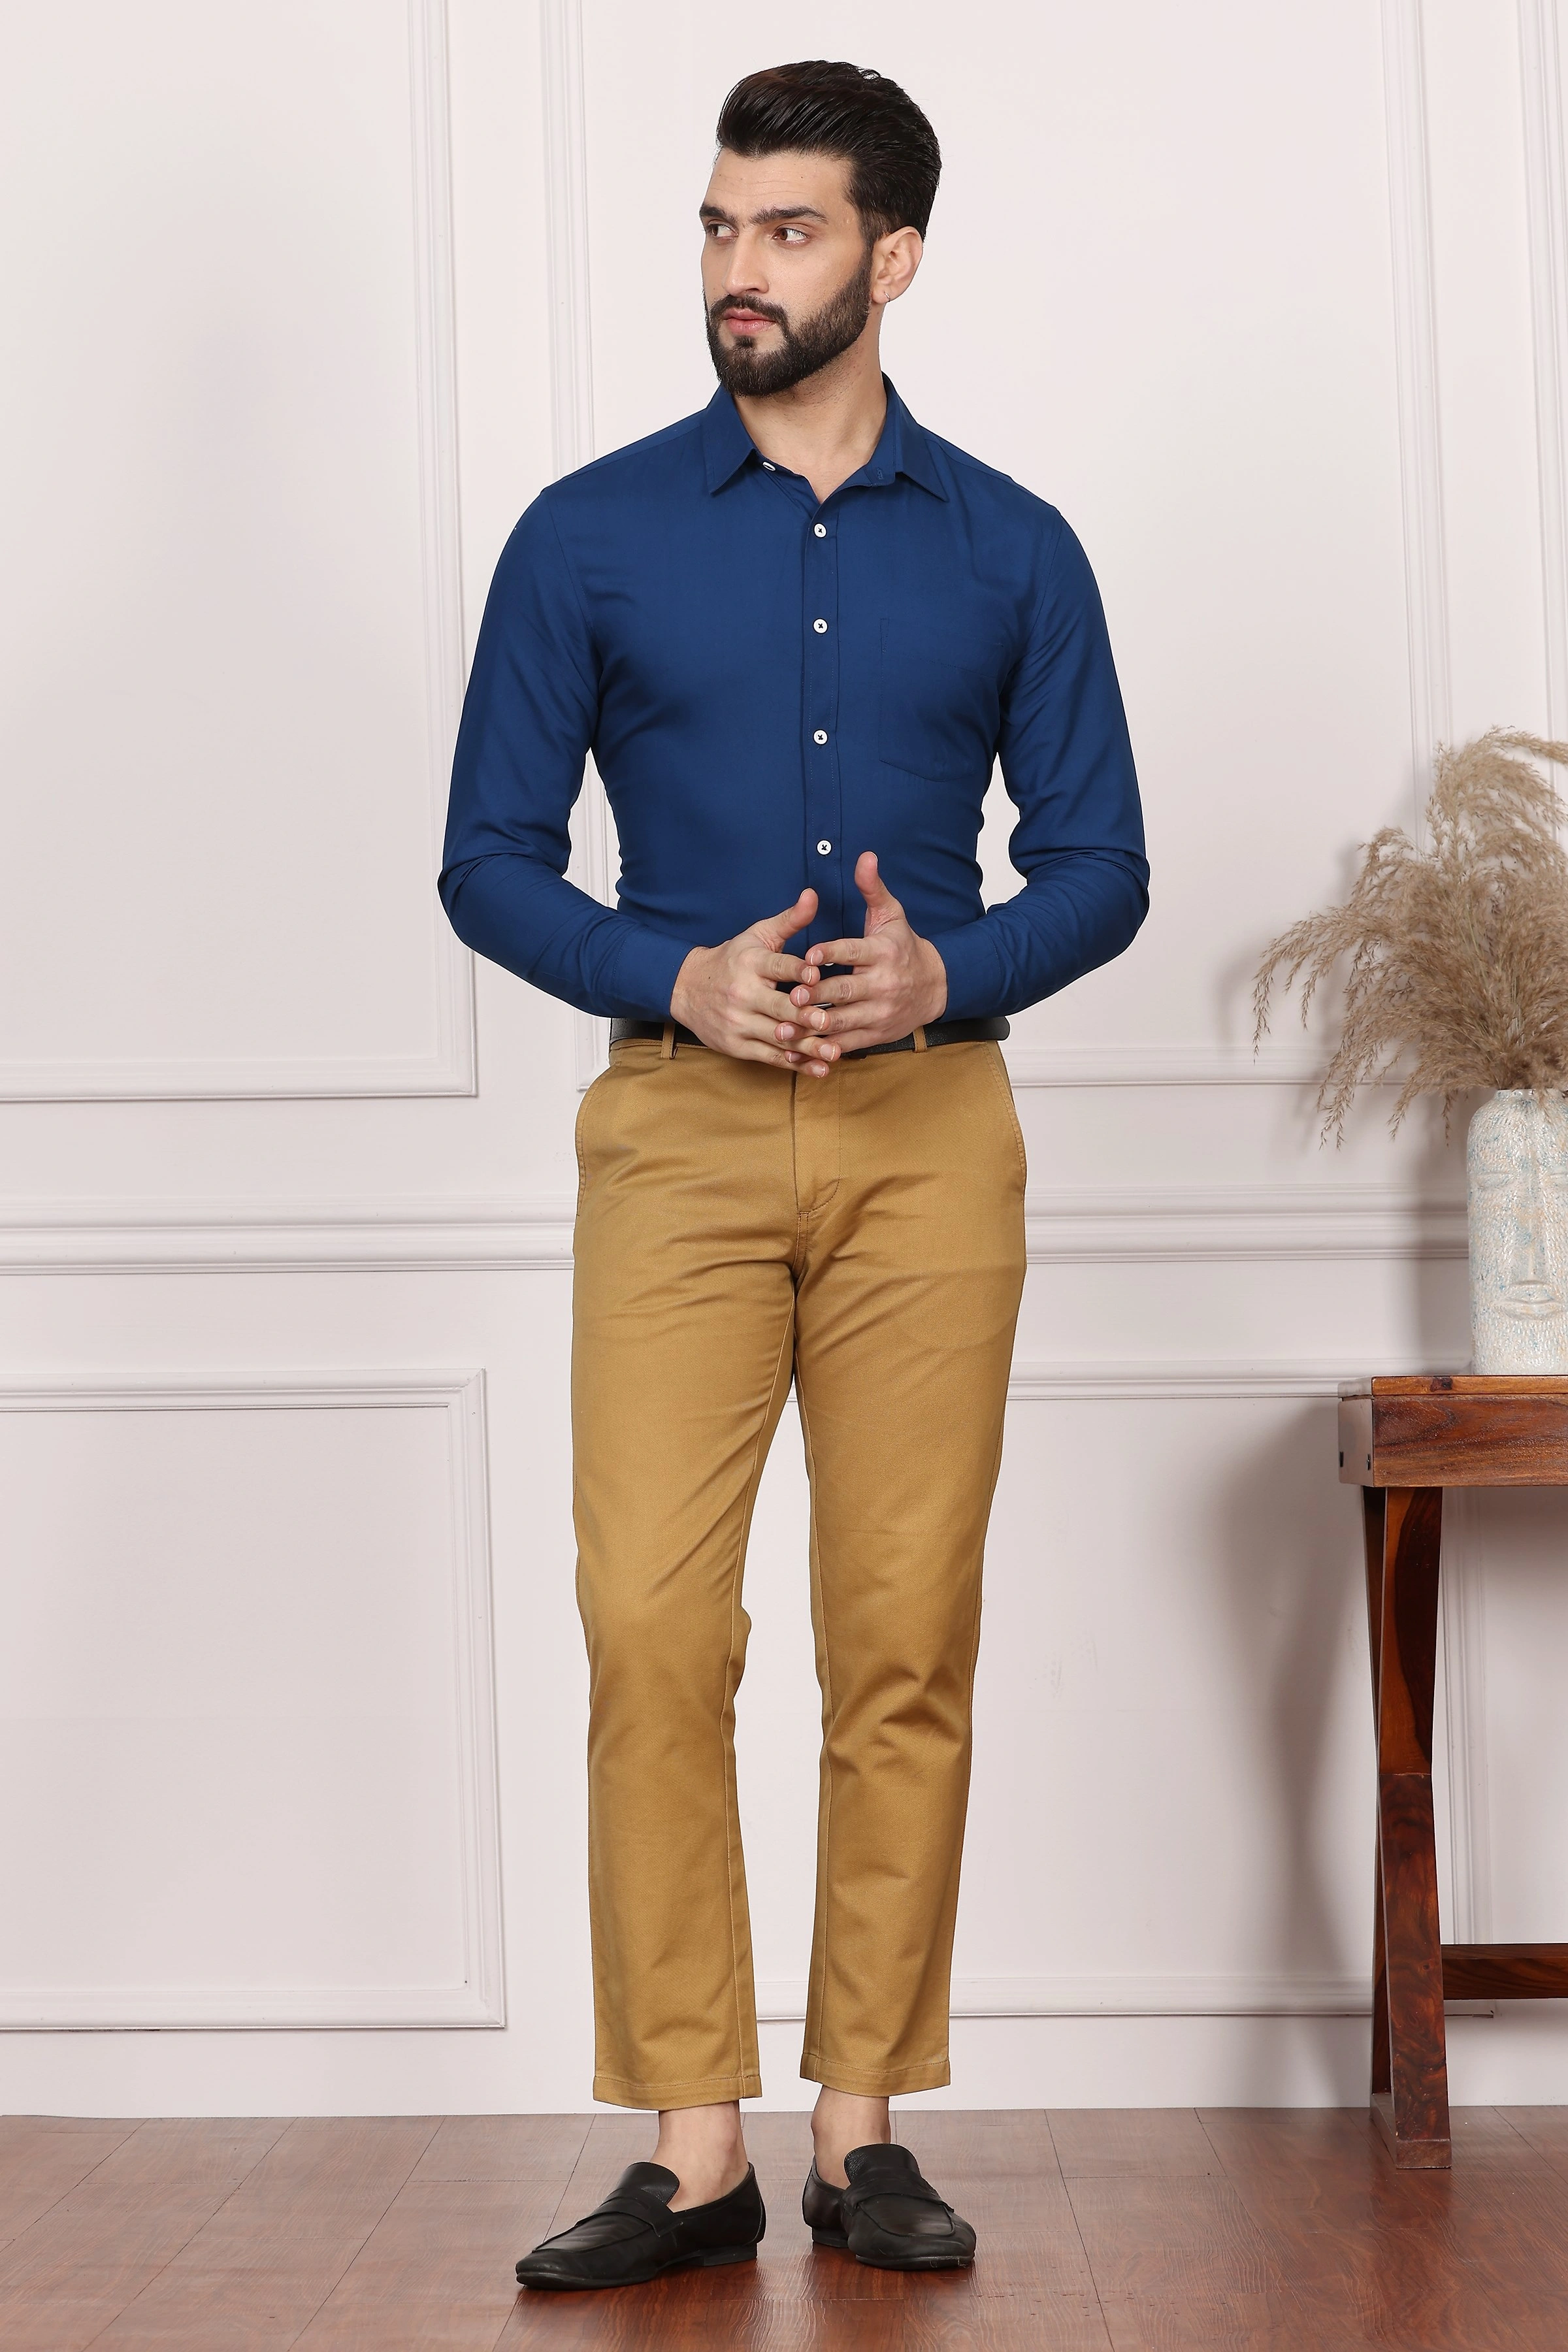 Royal Blue Formal Cotton Shirt-S-5